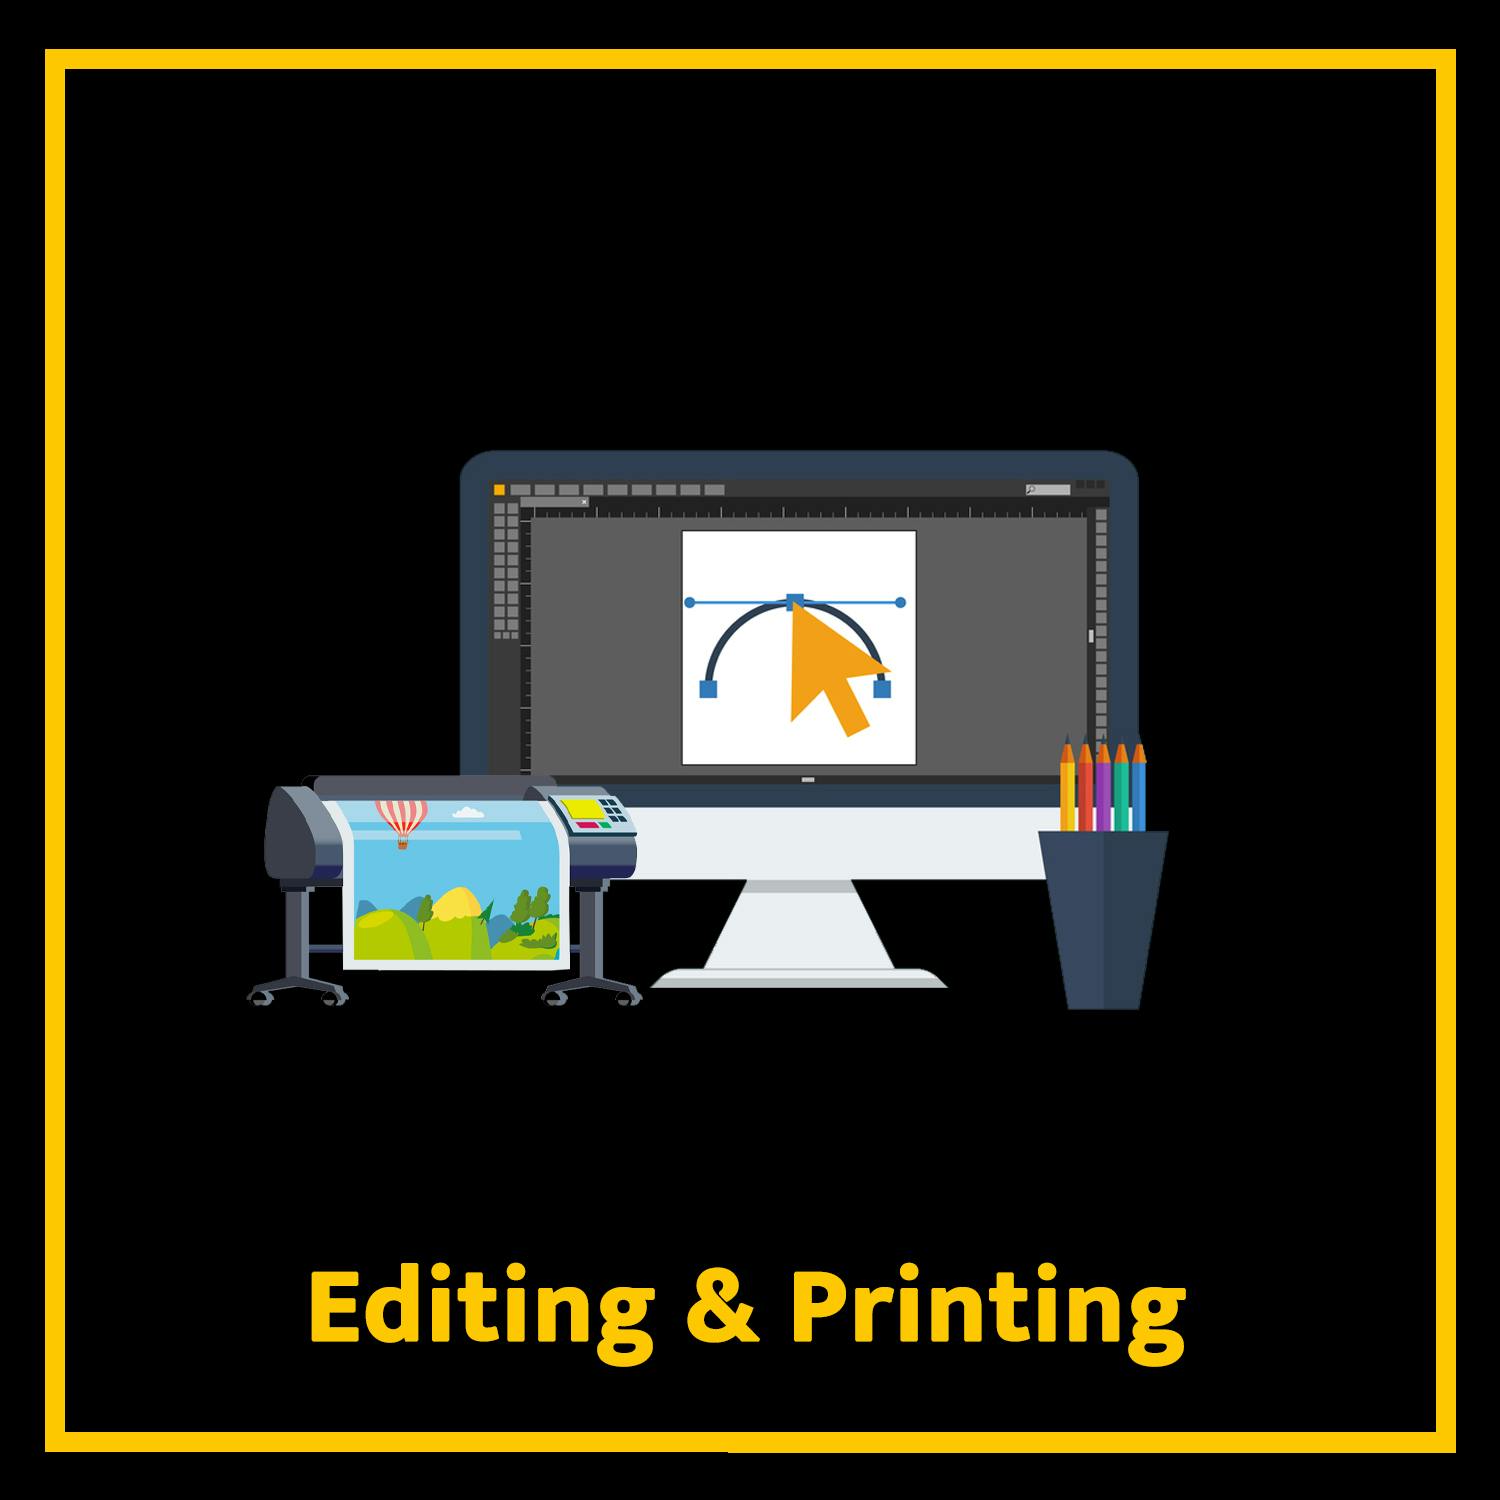 High Definition Editing & Printing